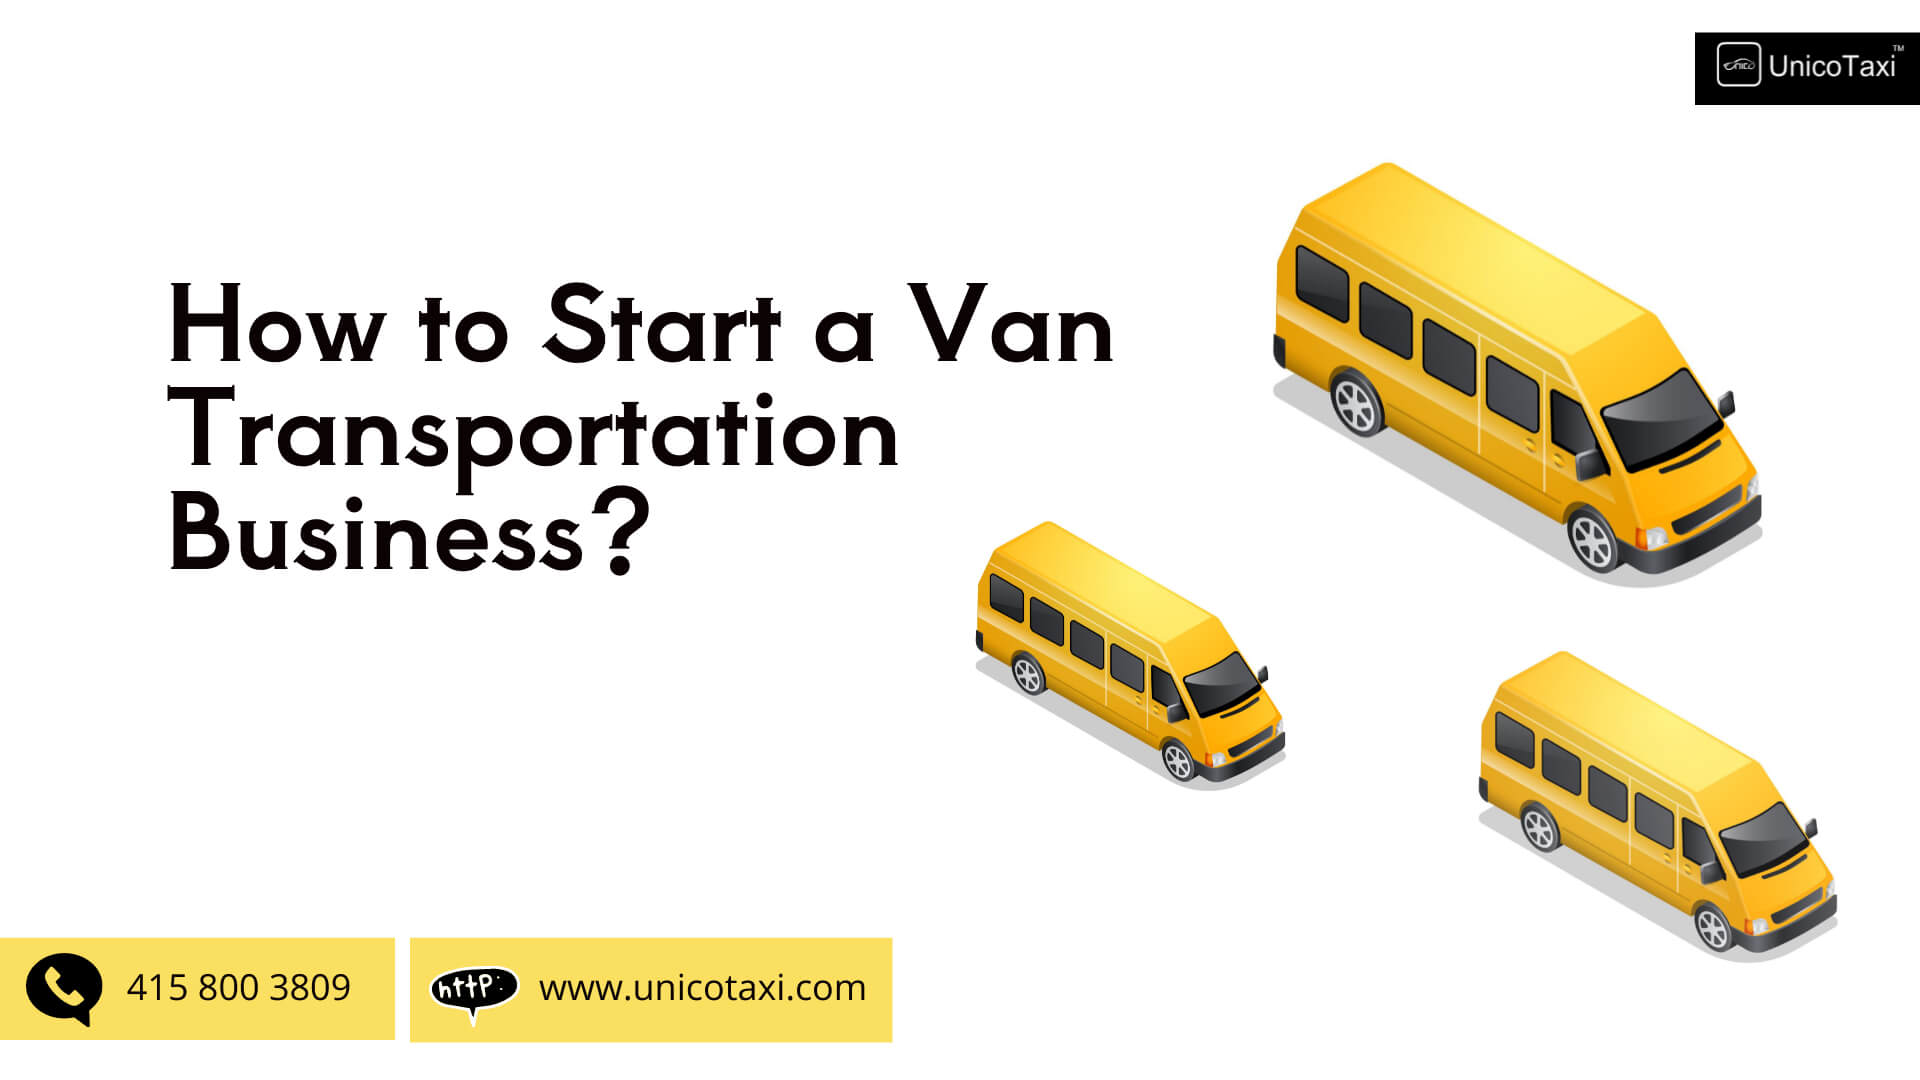 How to Start a Van Transportation Business?